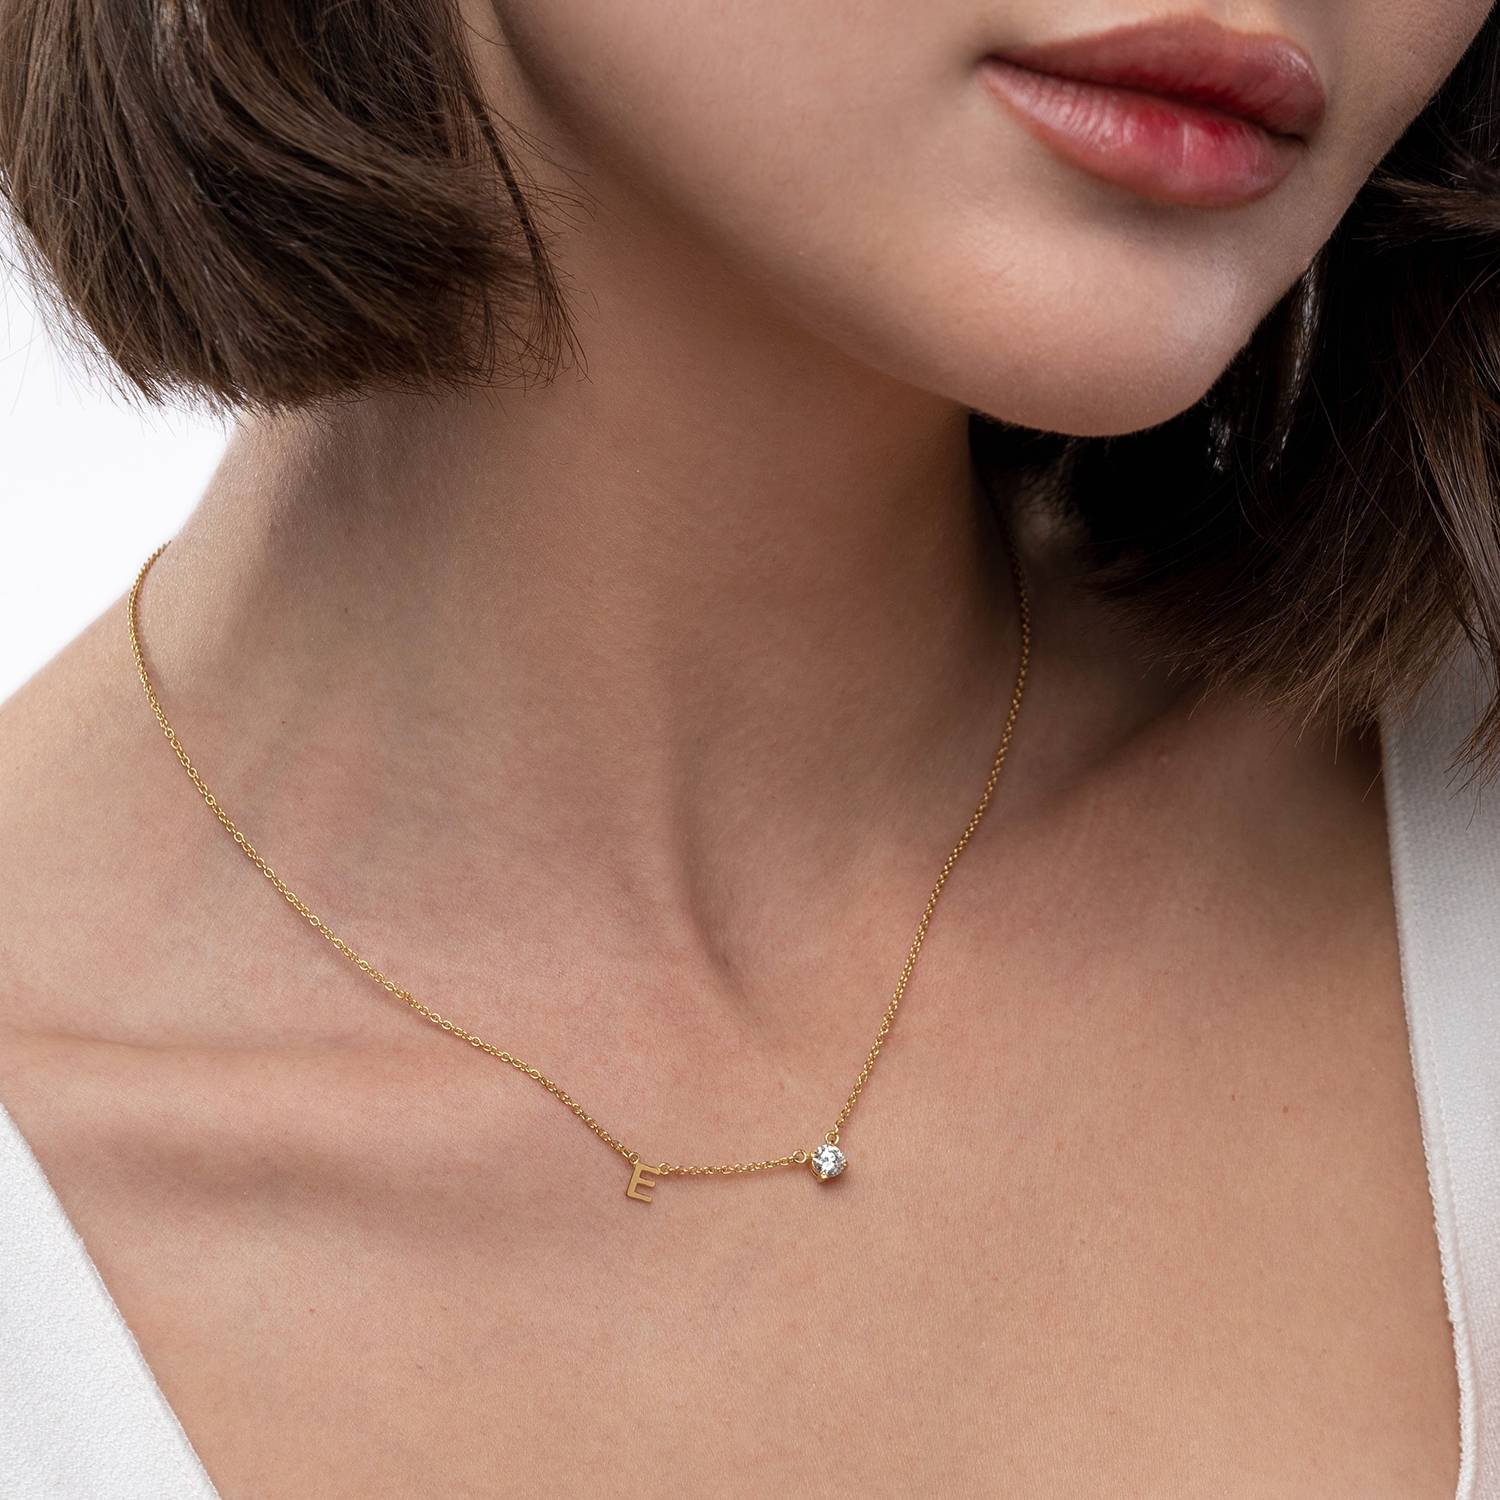 Inez Initial Necklace With 0.3 ct Premium Diamond - Gold Vermeil-5 product photo